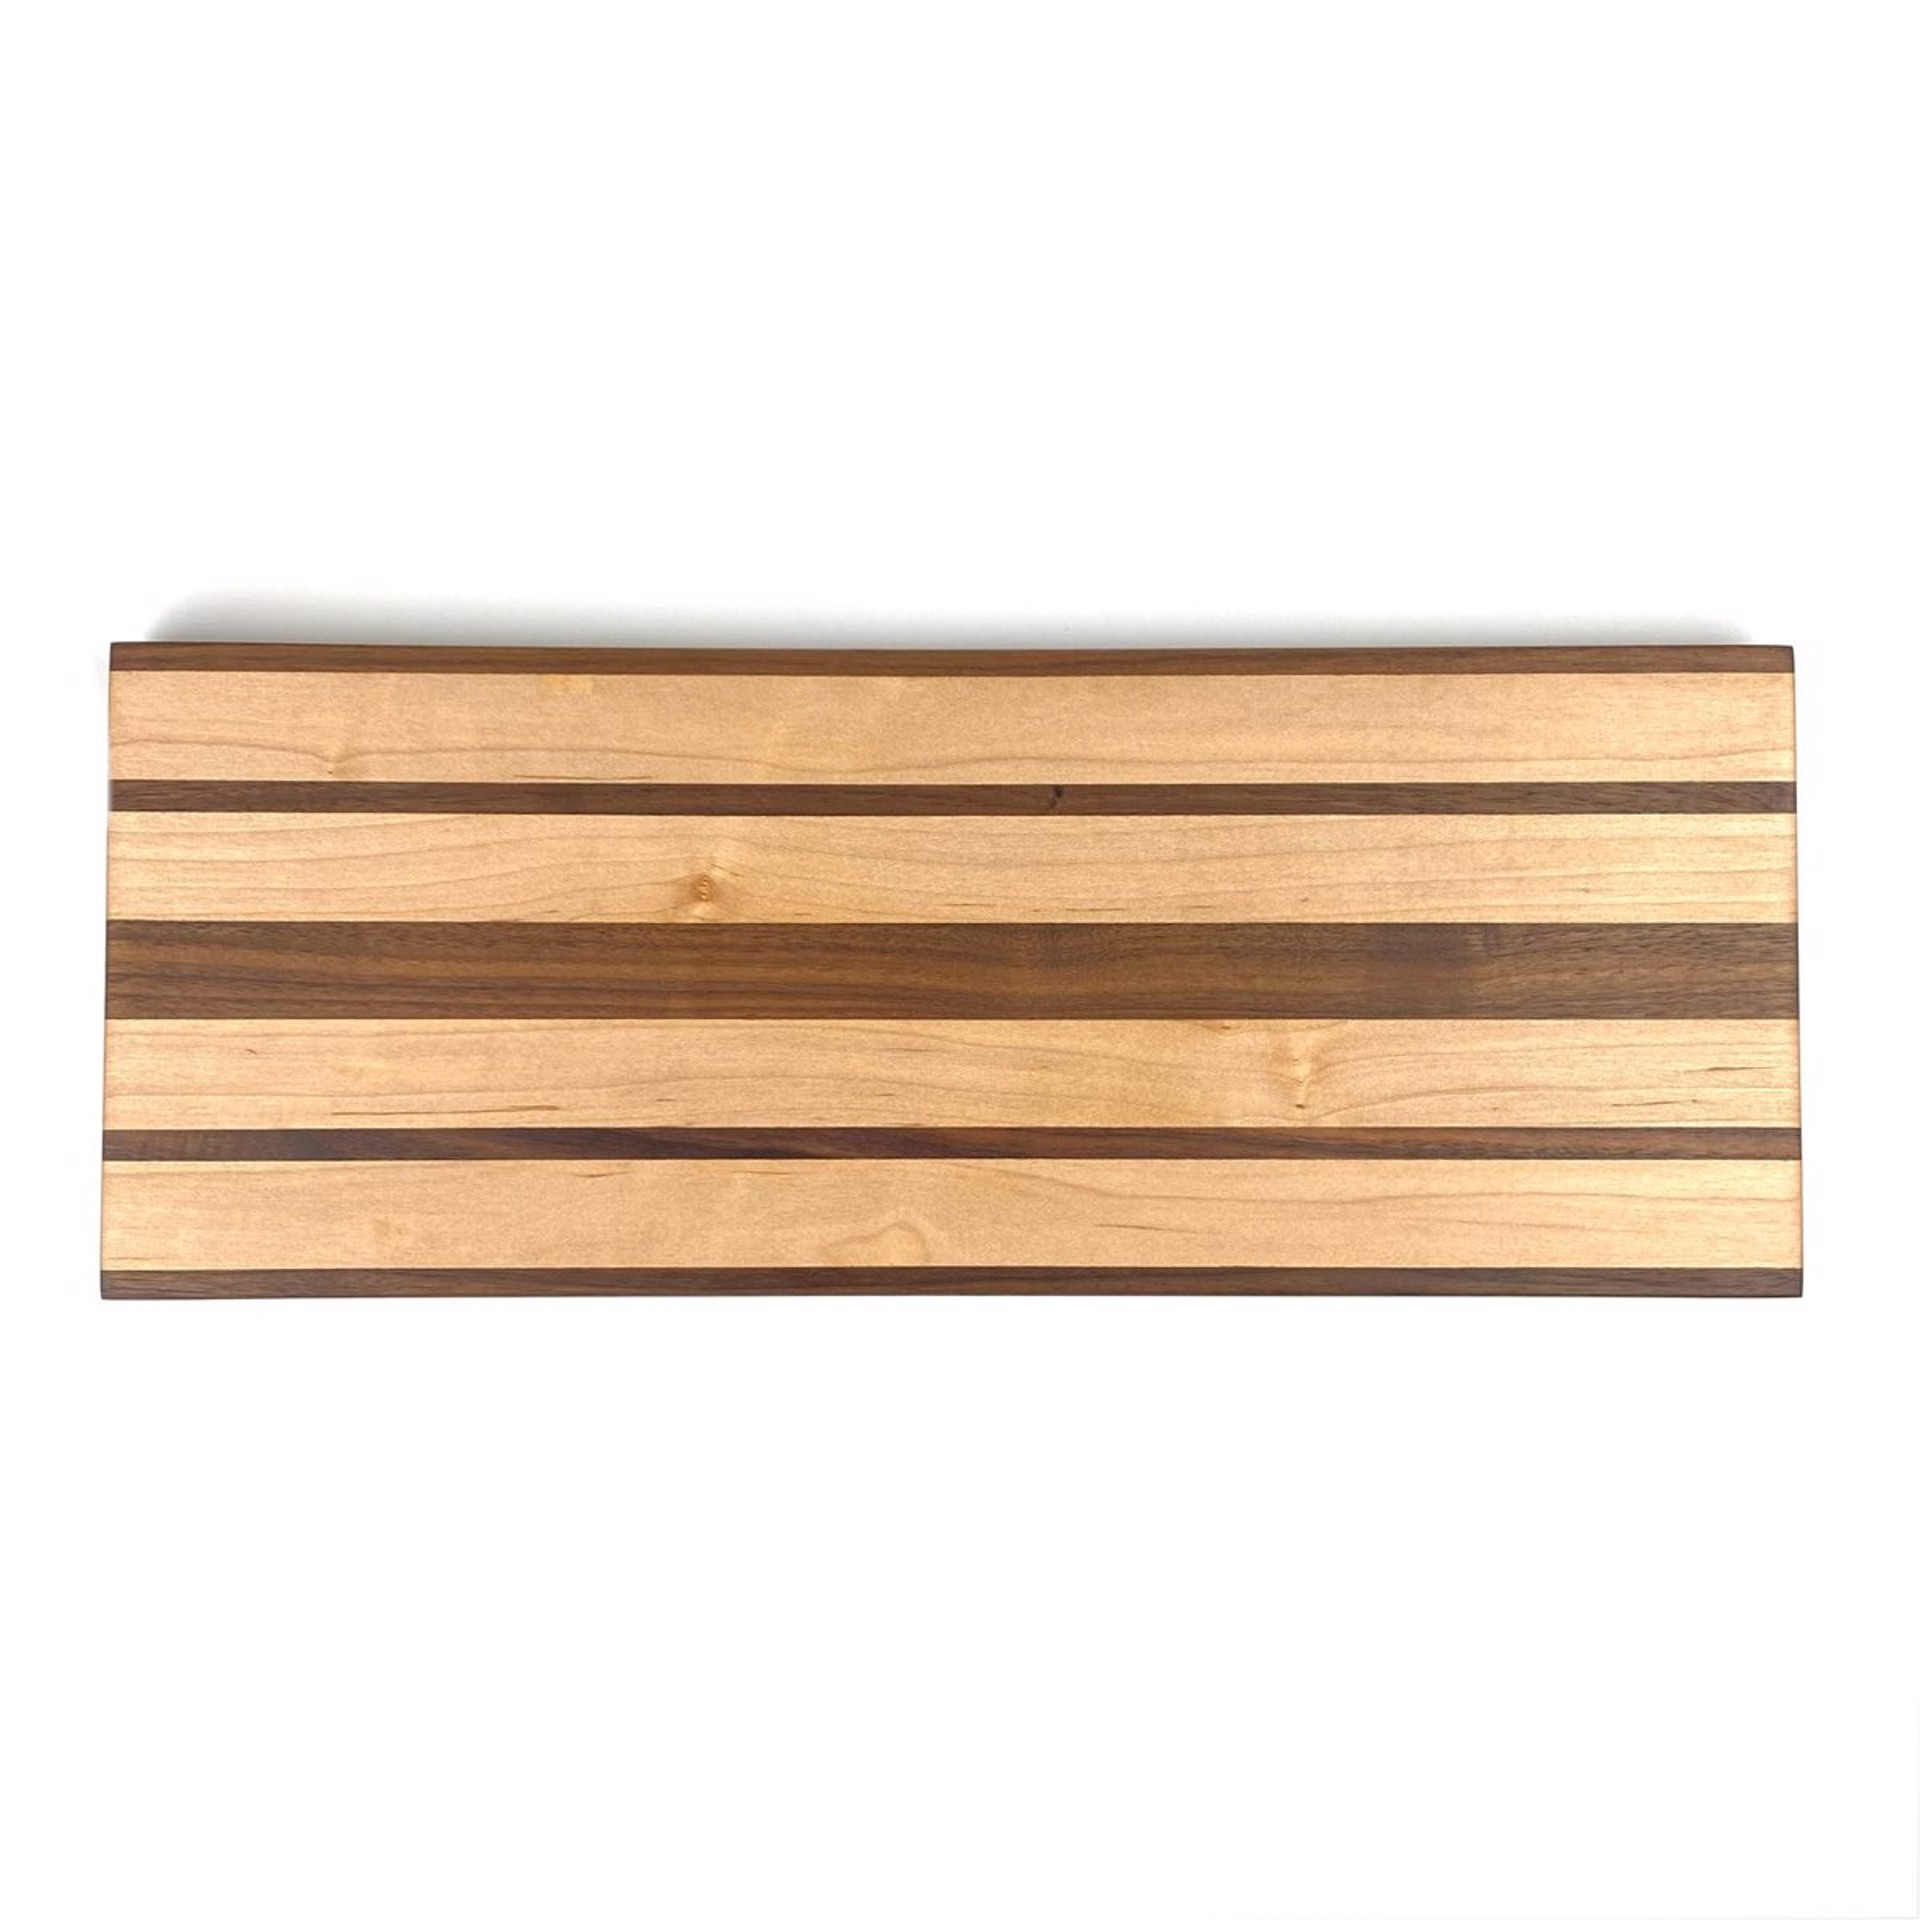 Maple and Walnut Thin Board by Jon Cordes